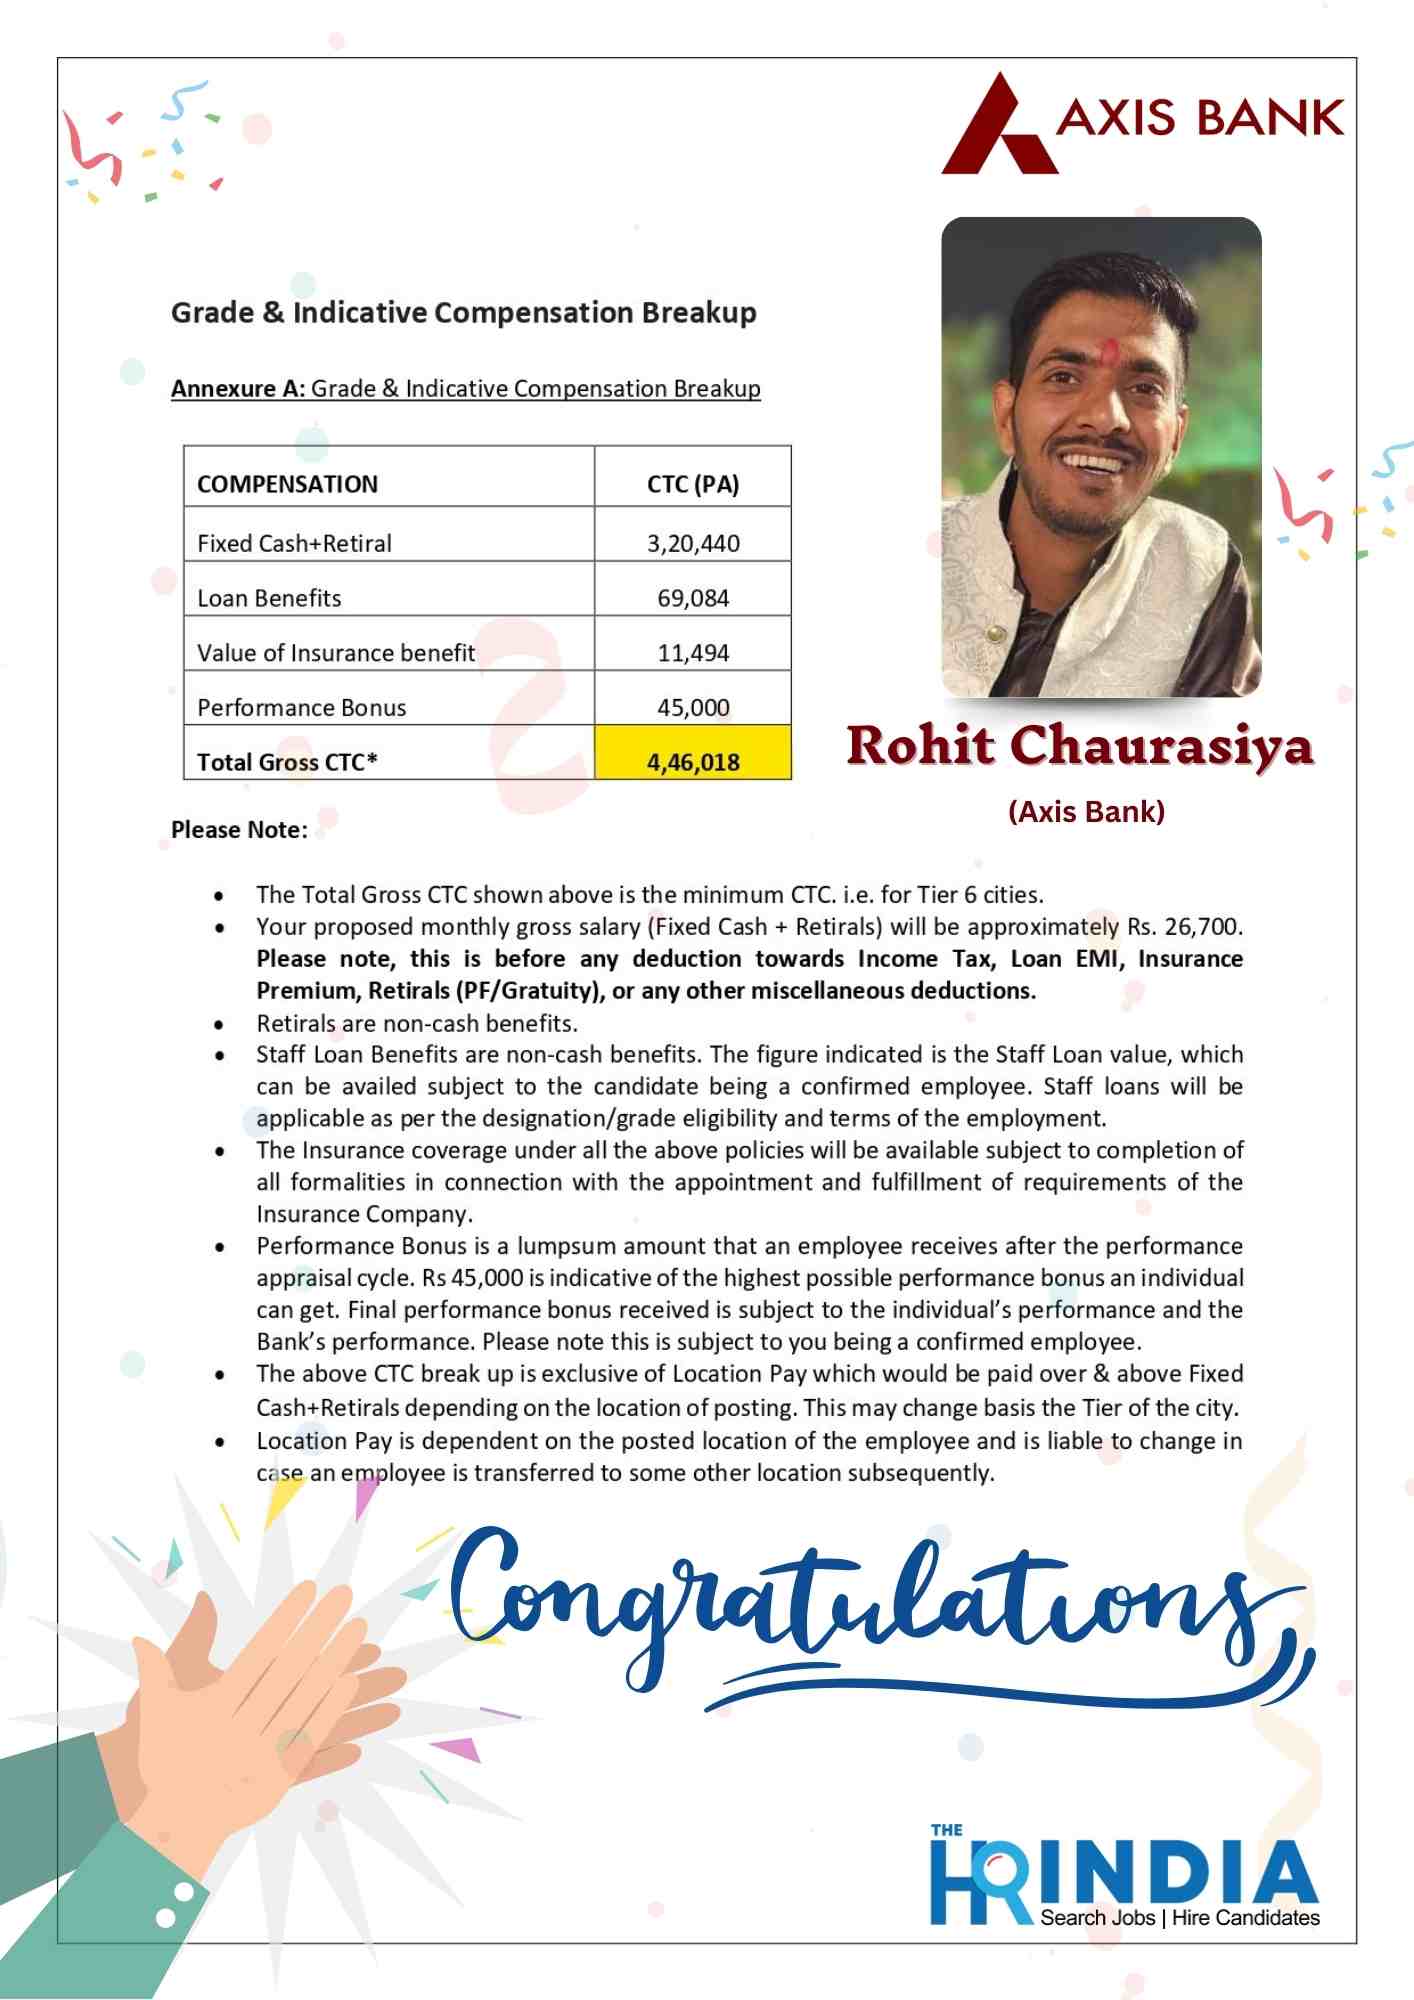 Rohit Chaurasiya  | The HR India